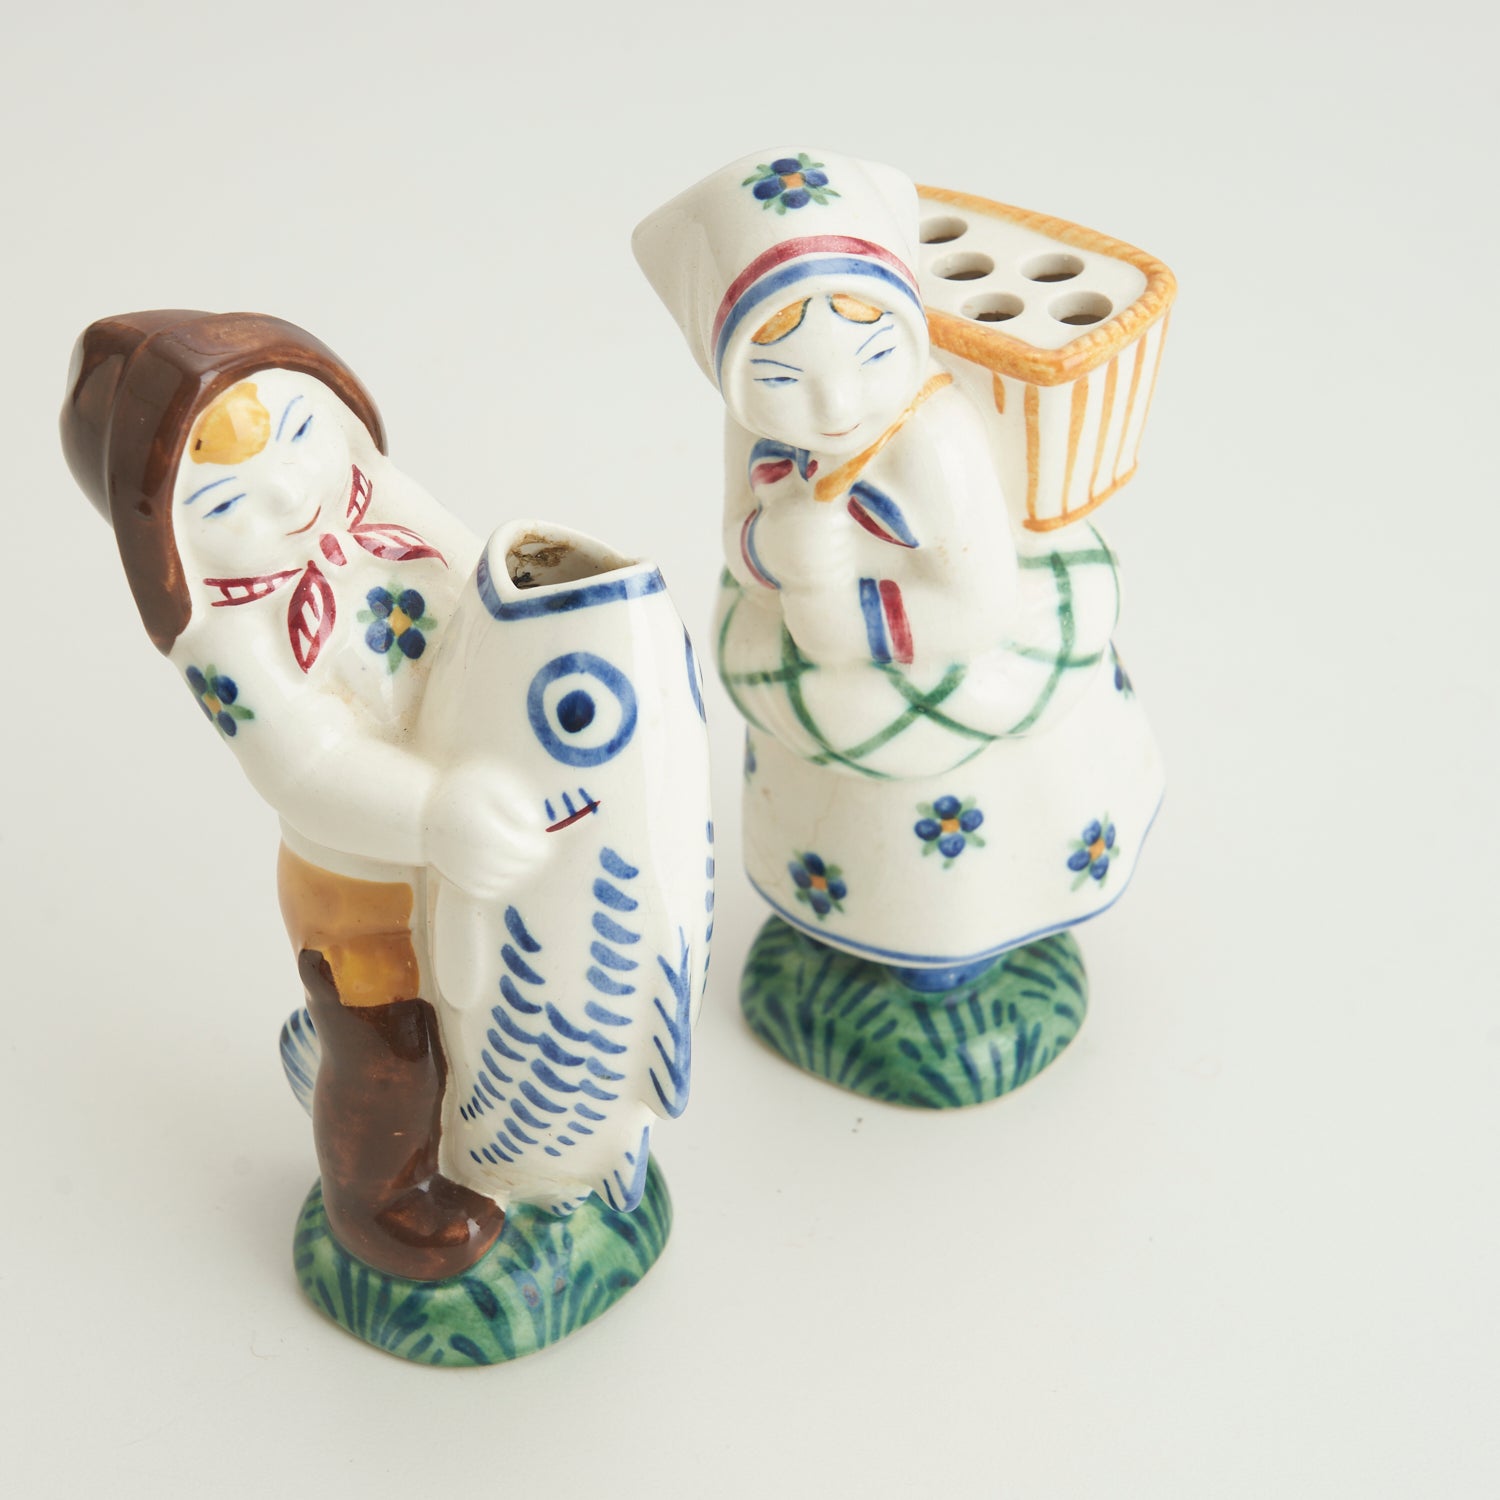 Pair of Ceramic Figurines by Royal Copenhagen